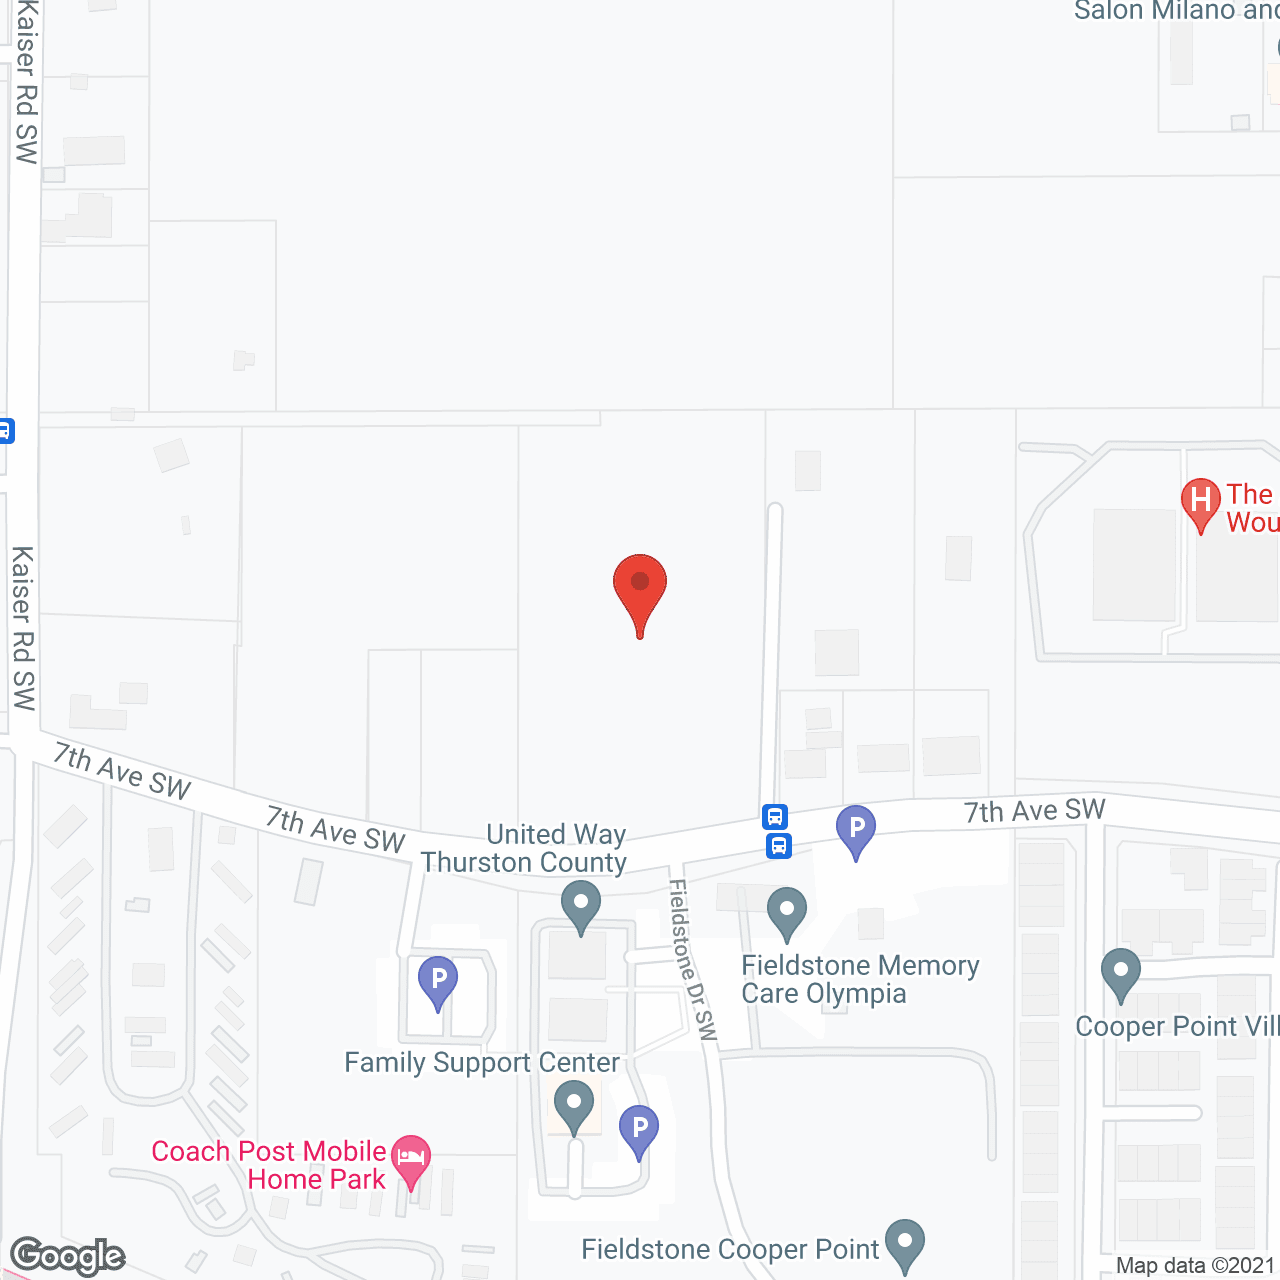 Fieldstone Olympia Memory Care in google map